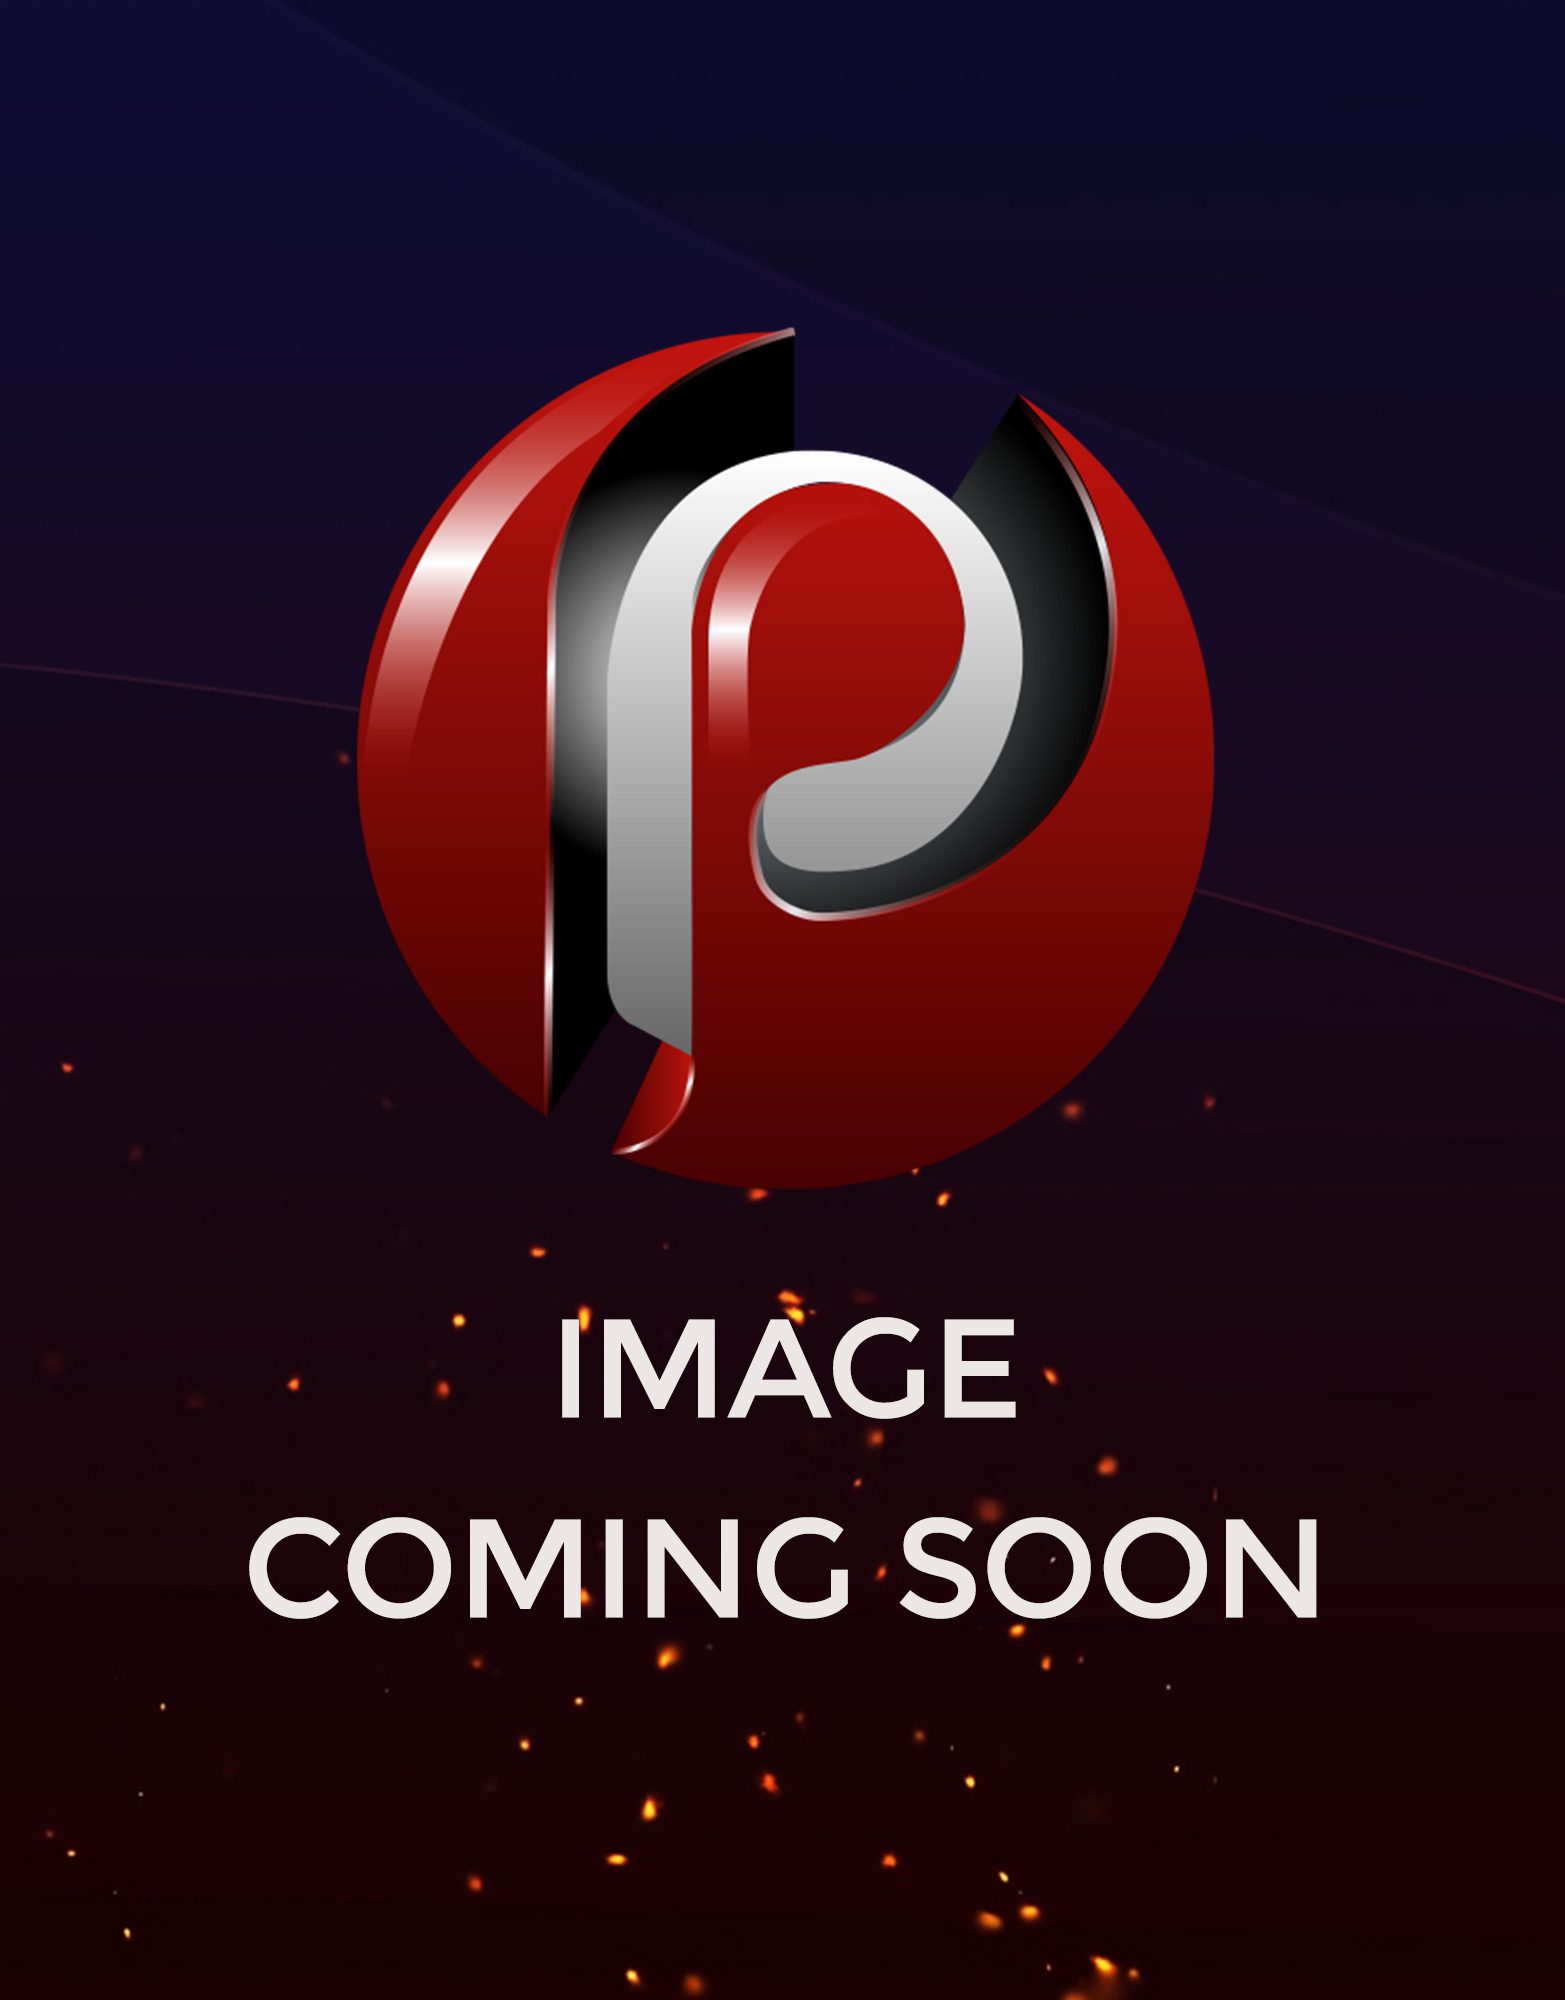 Image Placeholder - Prestige Gaming Solutions